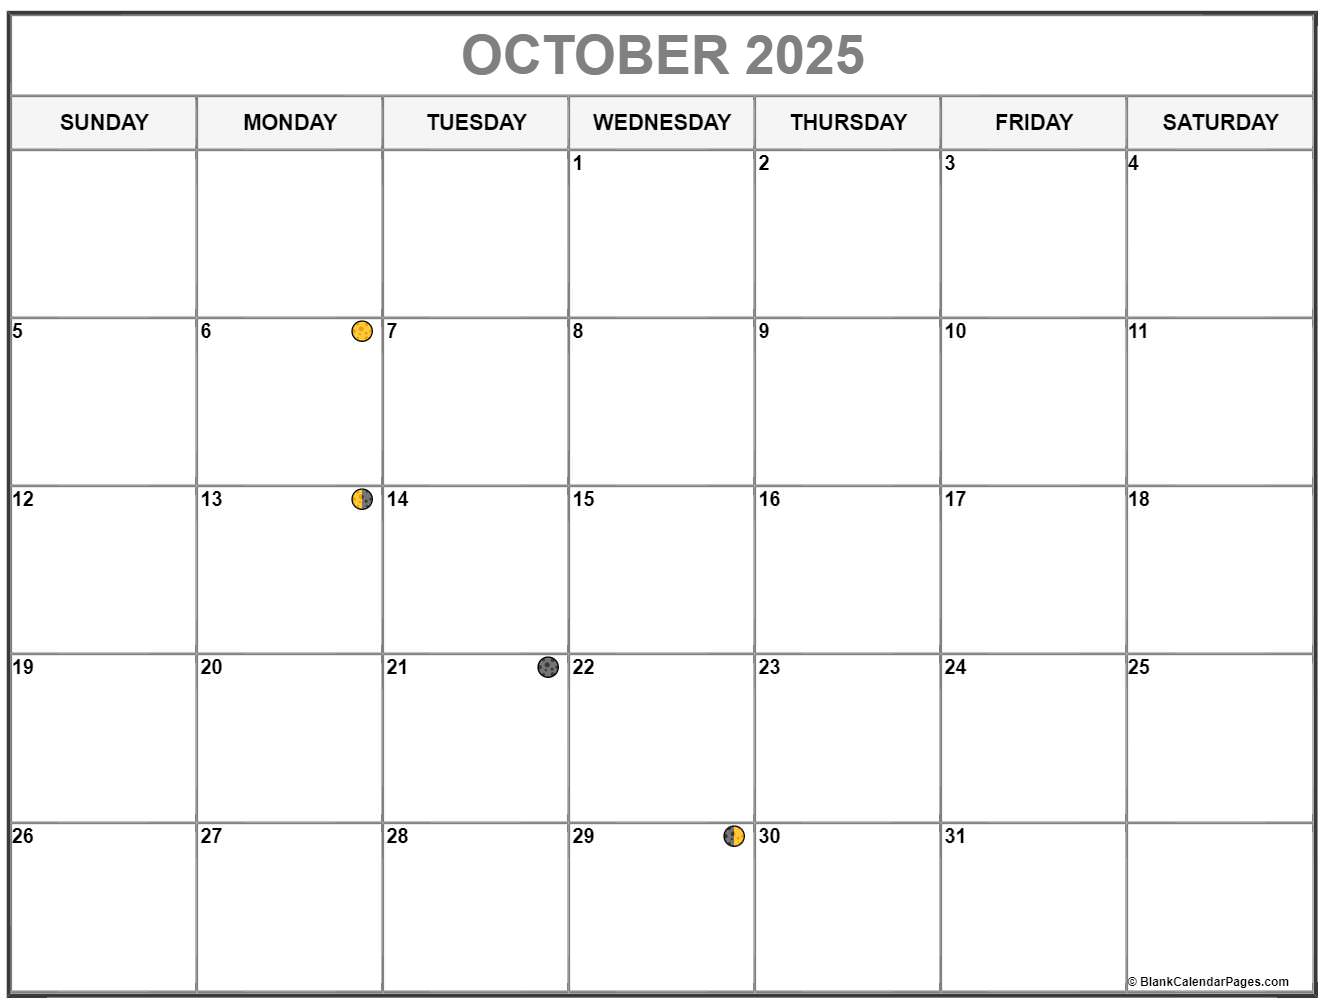 October 2025 Lunar Calendar Moon Phase Calendar